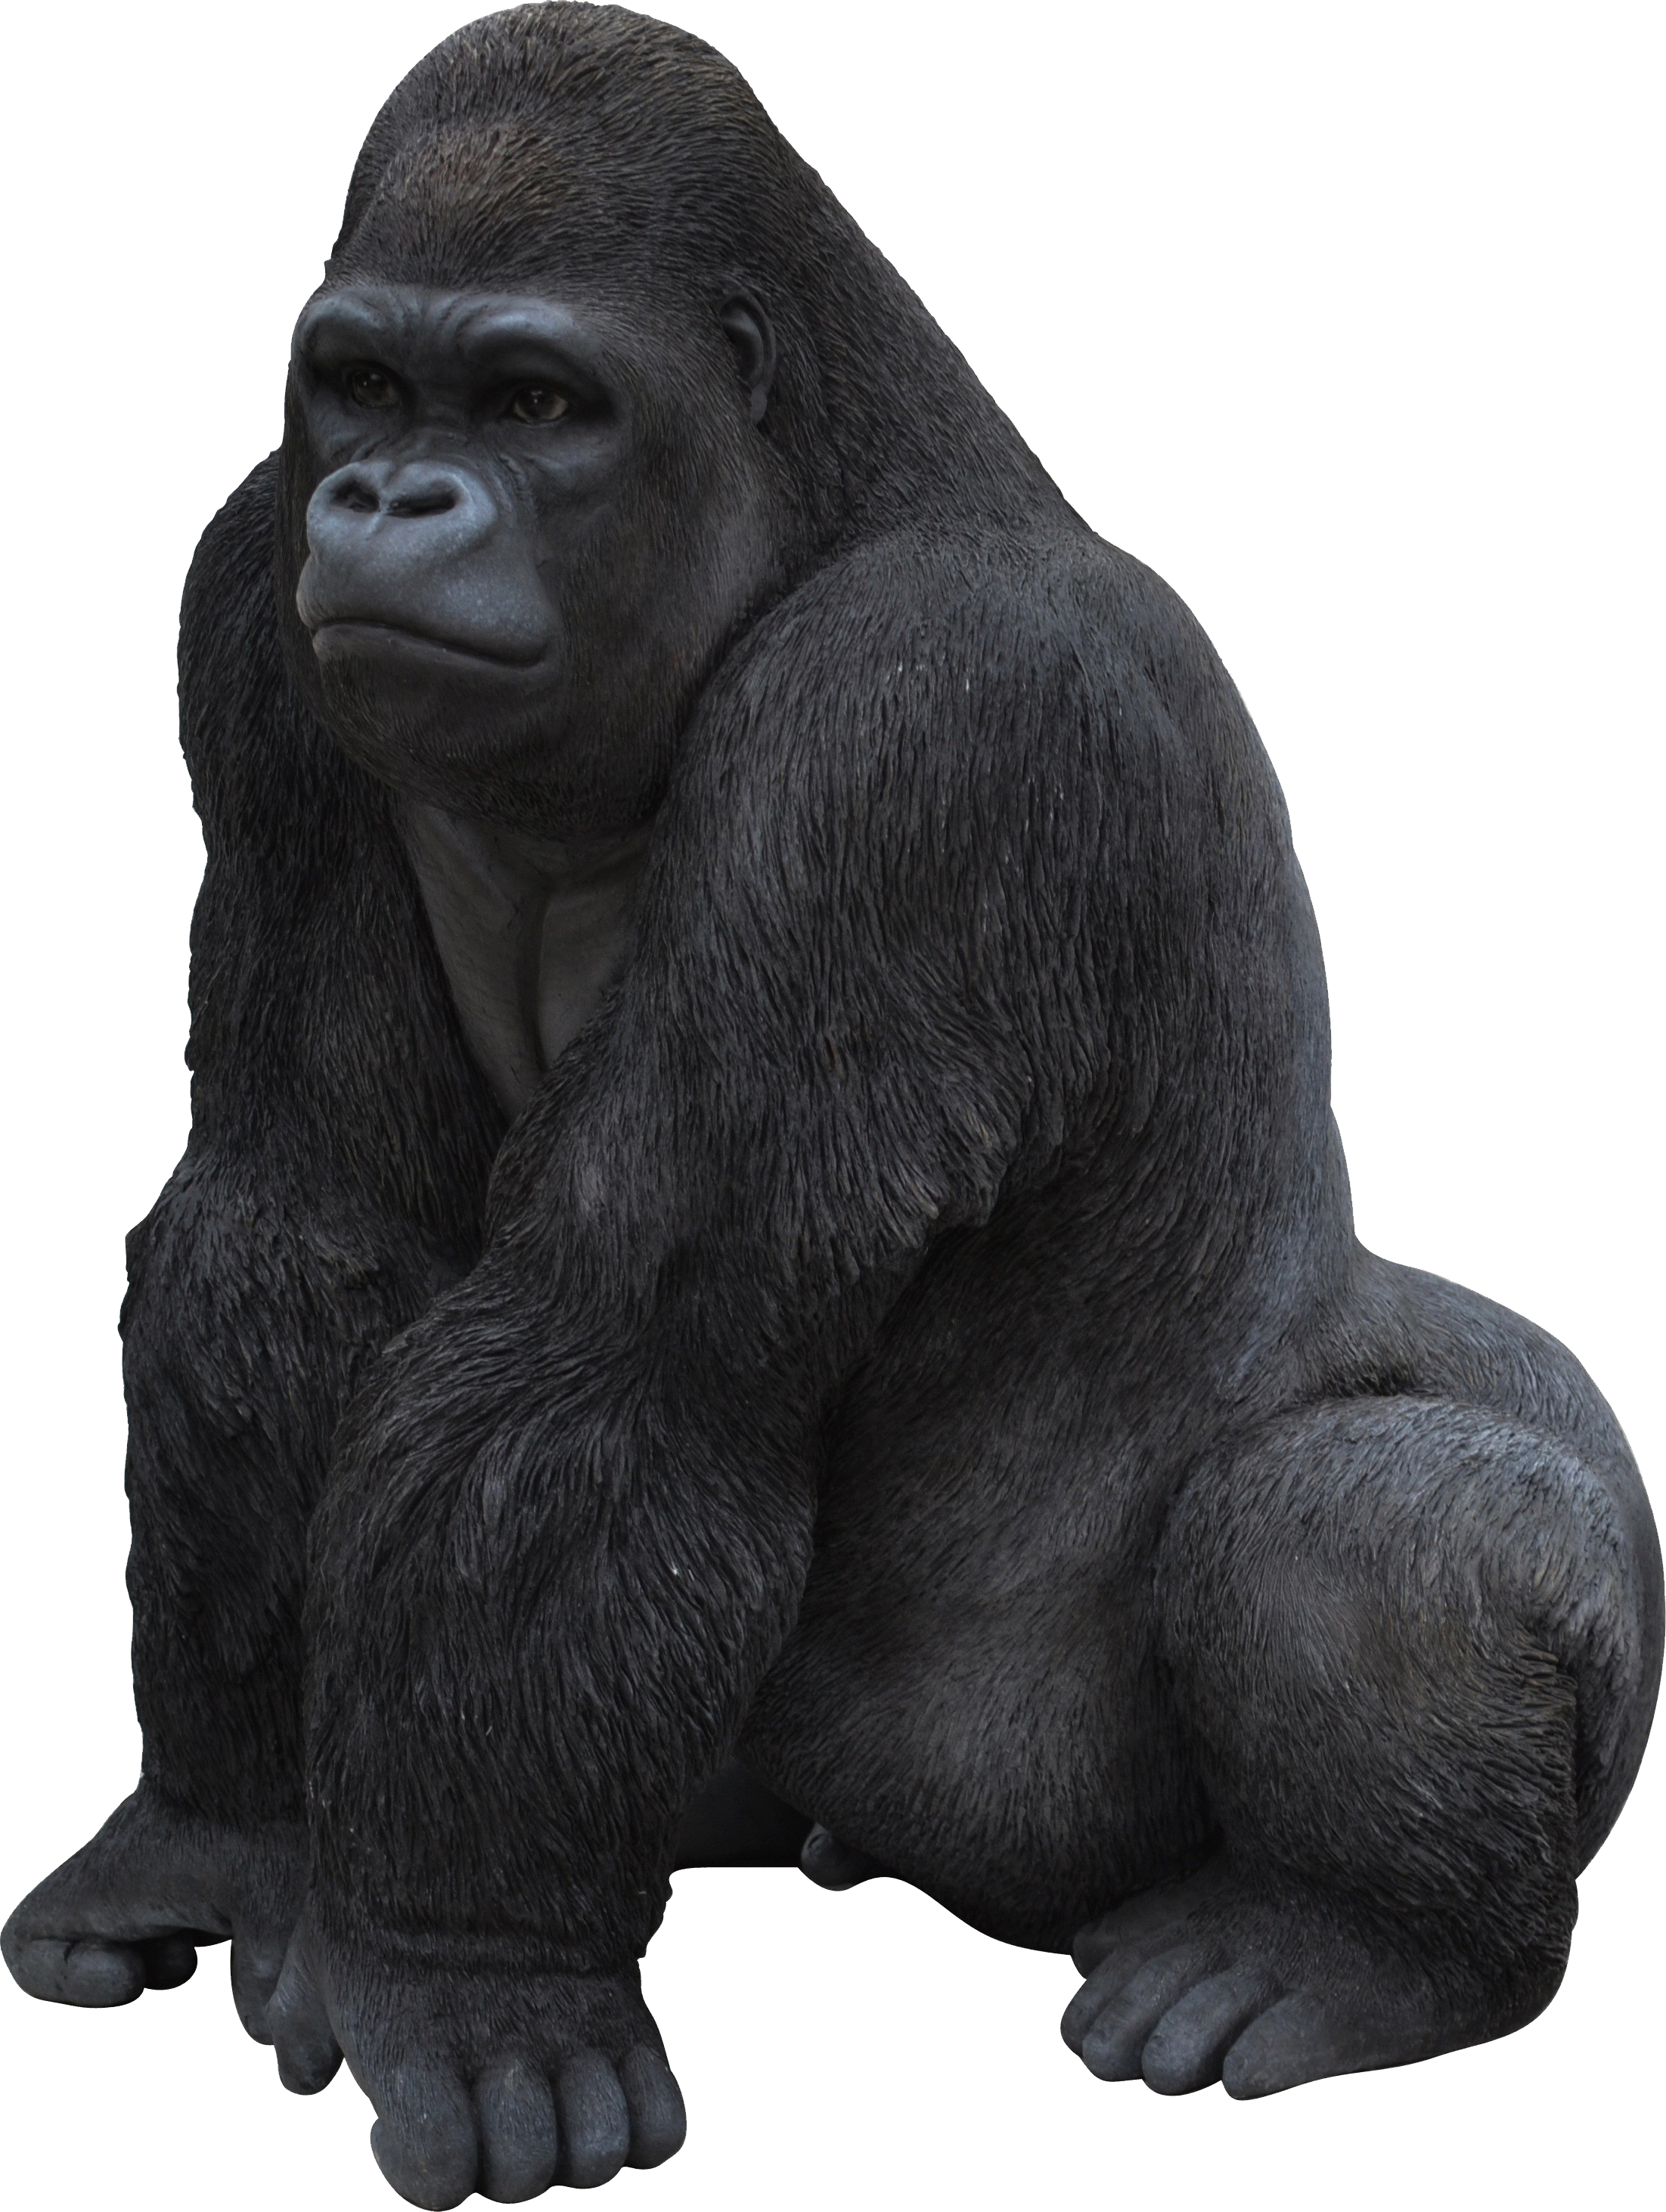 Gorilla PNG - 12141